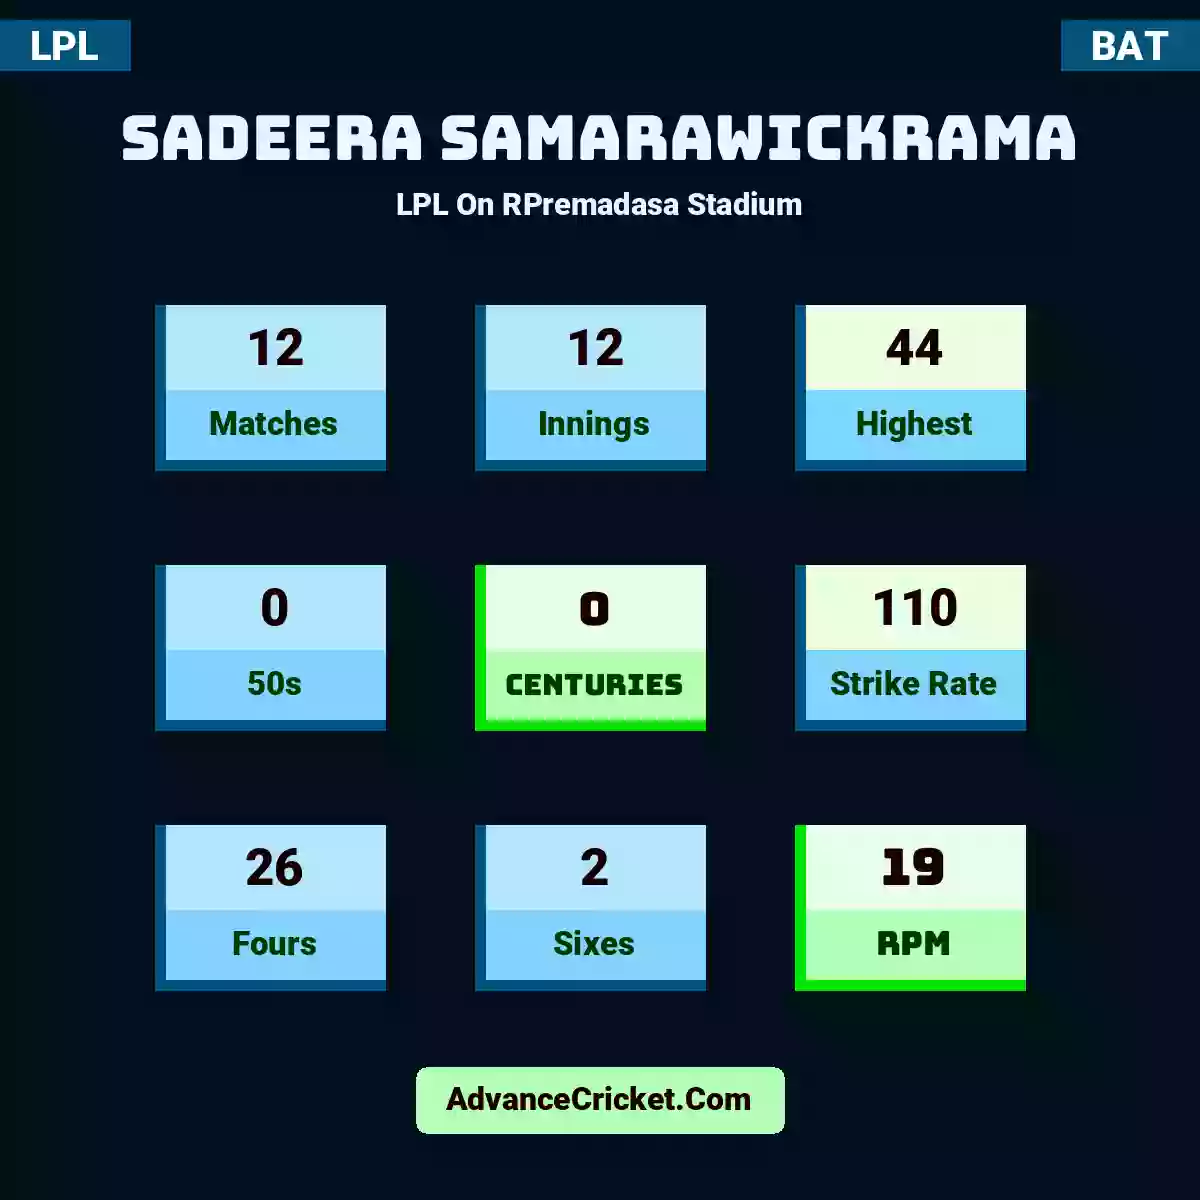 Sadeera Samarawickrama LPL  On RPremadasa Stadium, Sadeera Samarawickrama played 12 matches, scored 44 runs as highest, 0 half-centuries, and 0 centuries, with a strike rate of 110. S.Samarawickrama hit 26 fours and 2 sixes, with an RPM of 19.